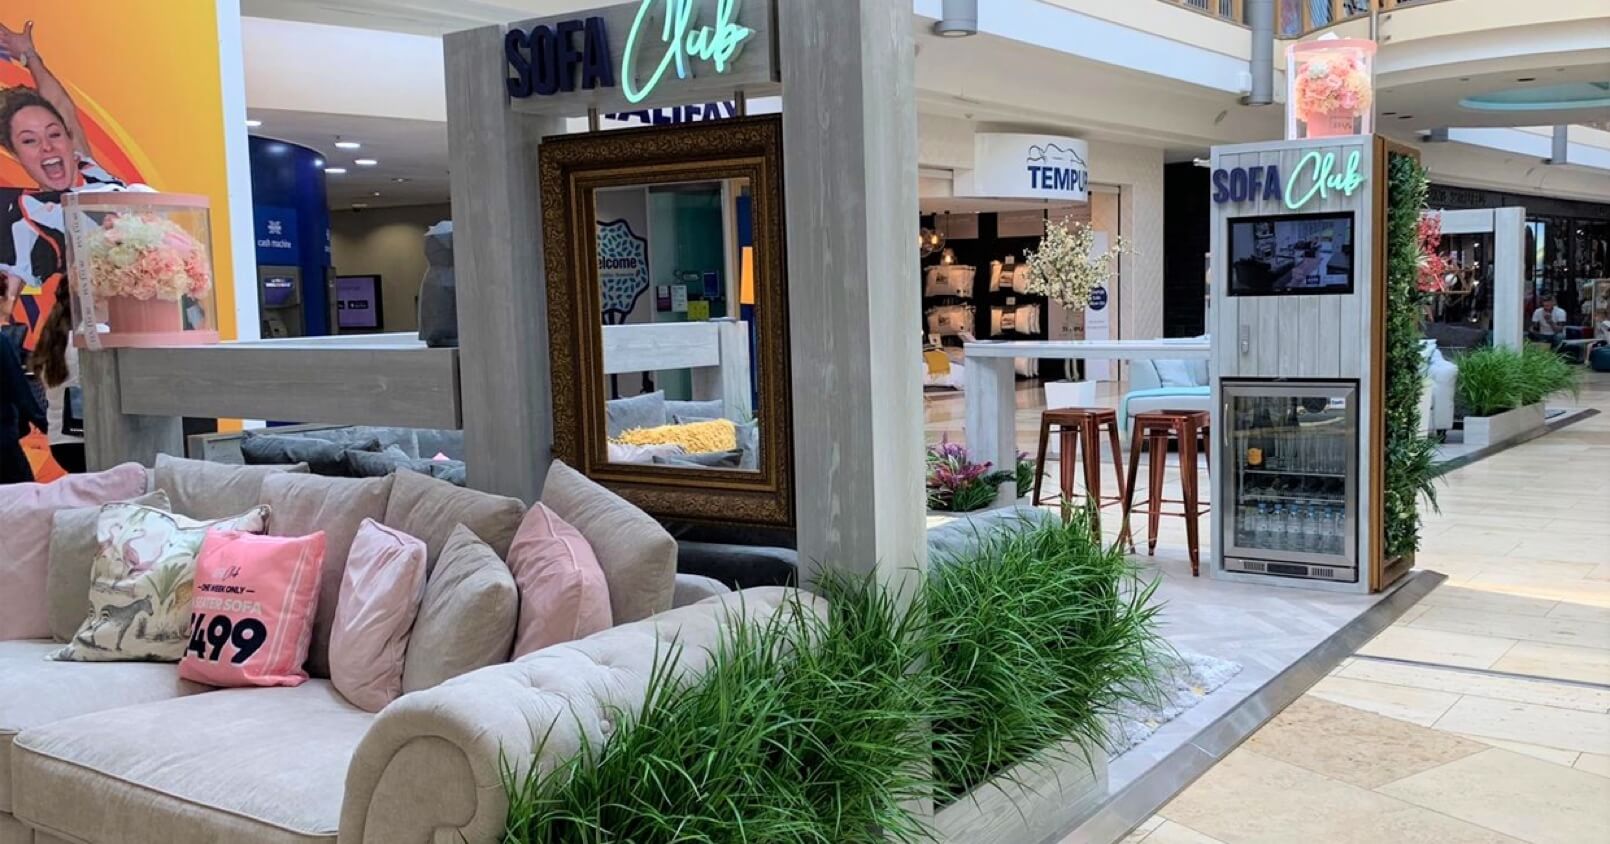 A Sofa Club physical retail location, set in a shopping mall.